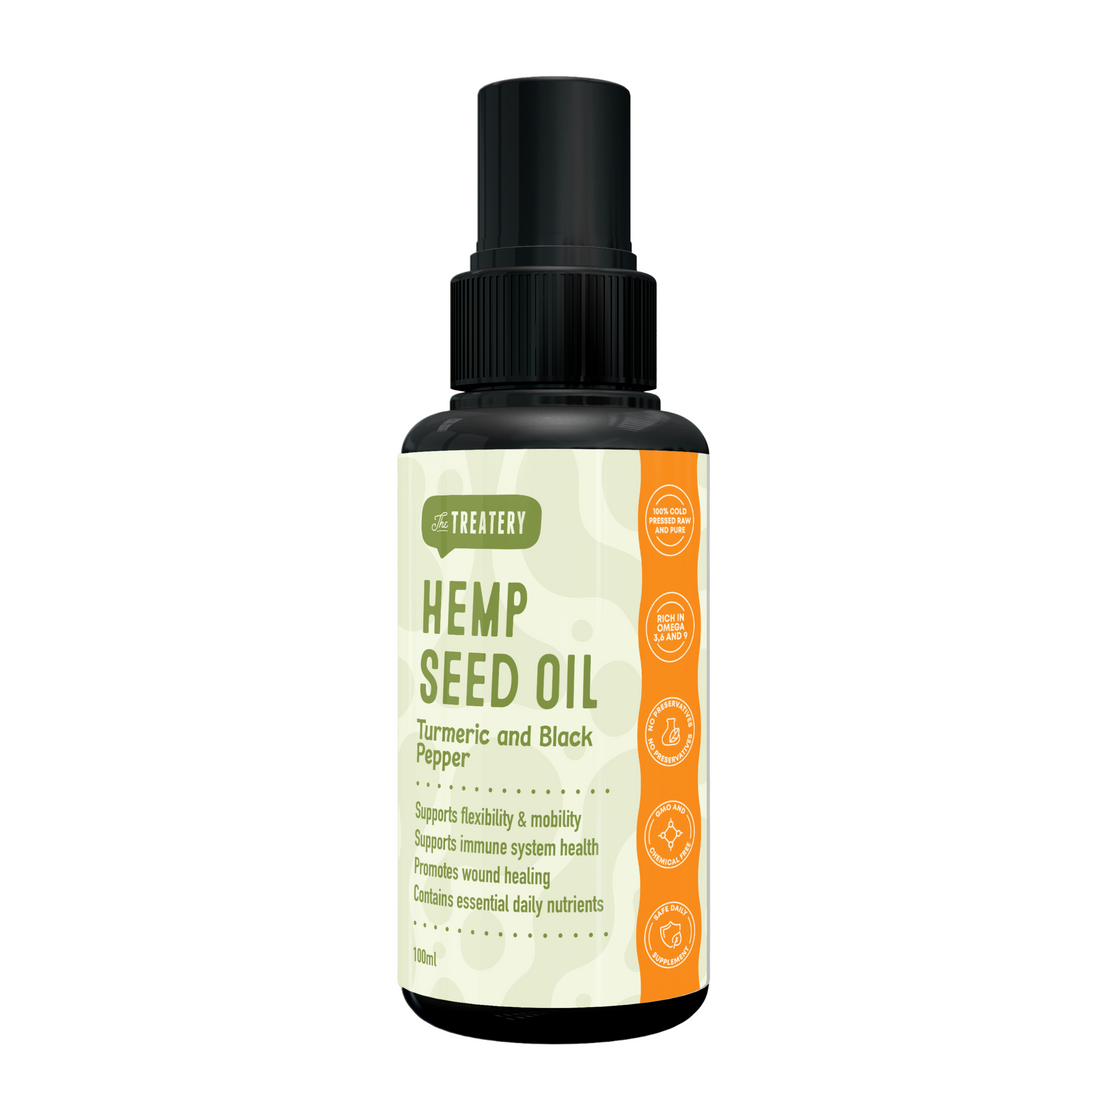 Hemp Seed Oil: Turmeric and Black Pepper